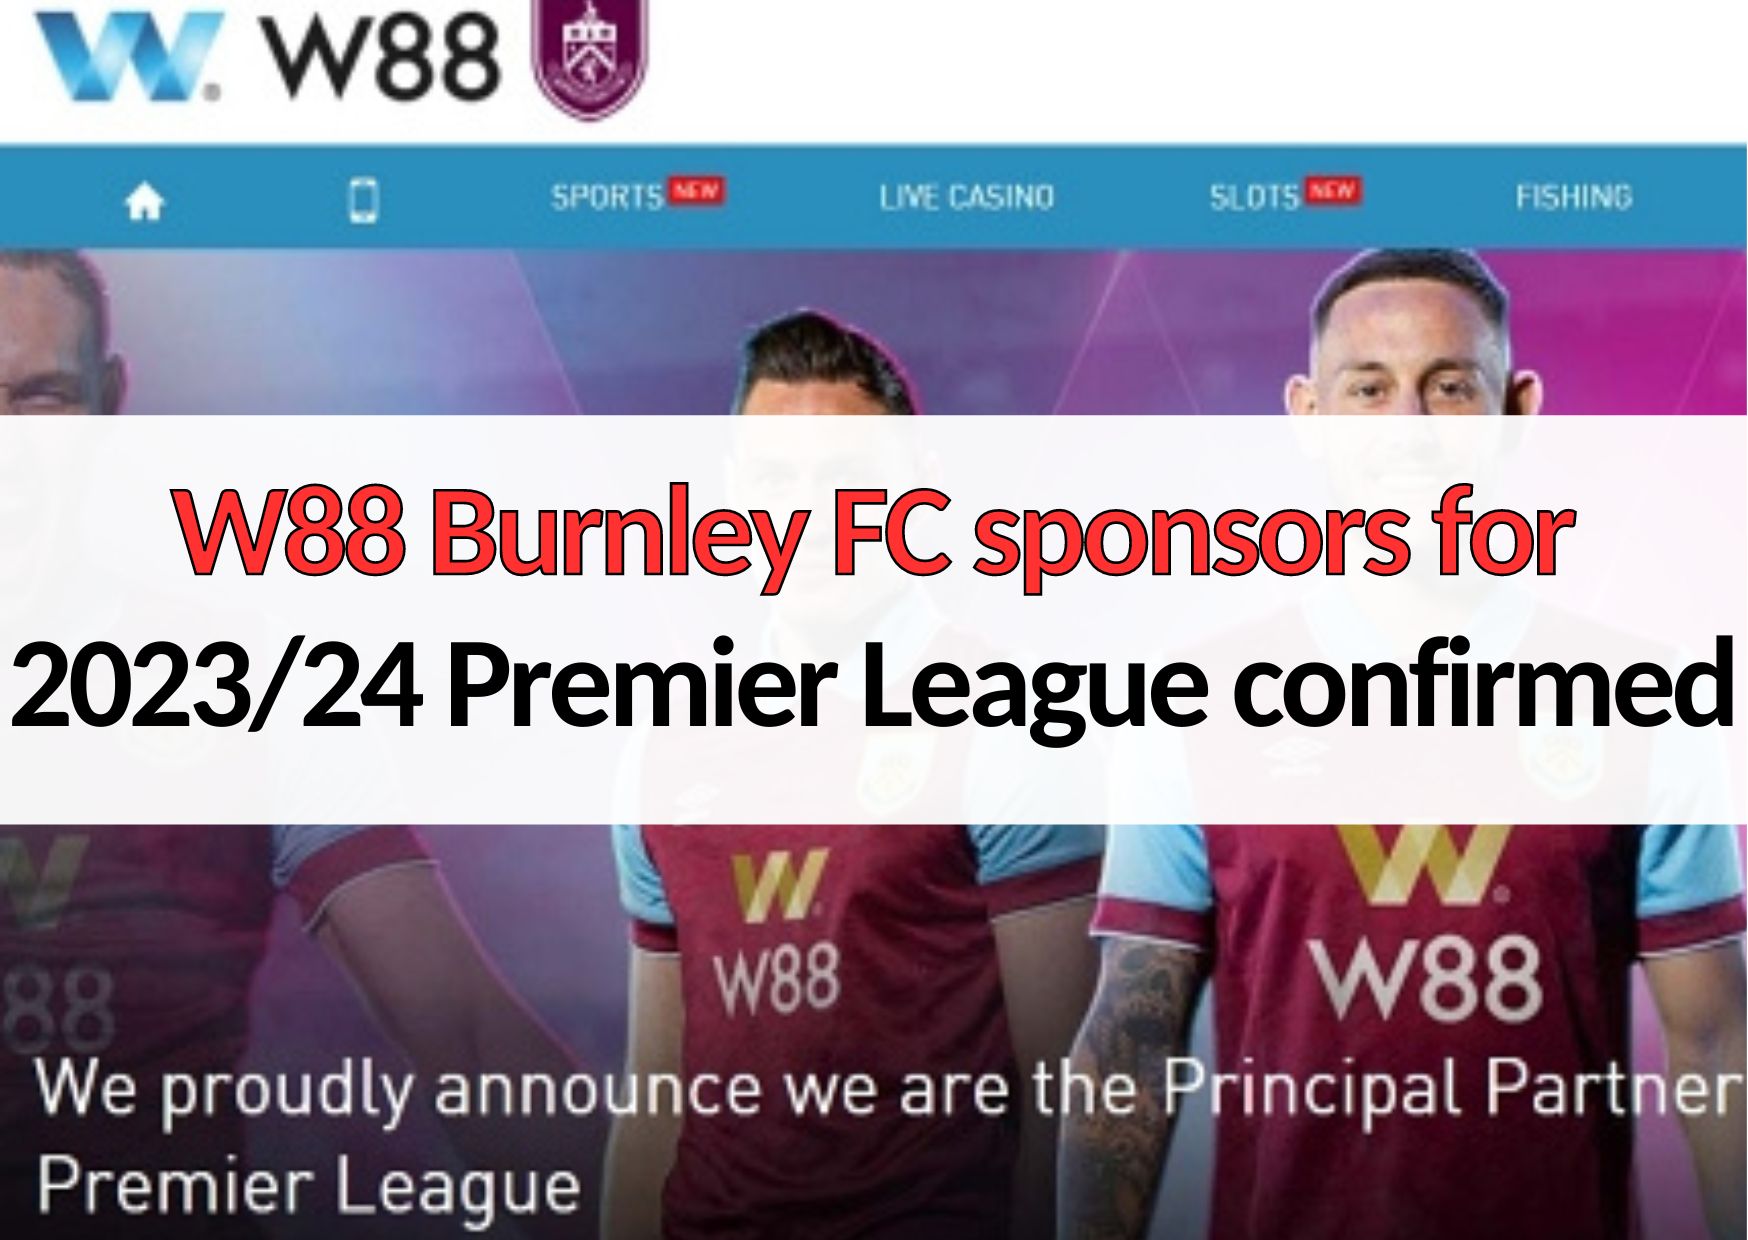 W88 Burnley FC sponsors for 2023/24 Premier League confirmed